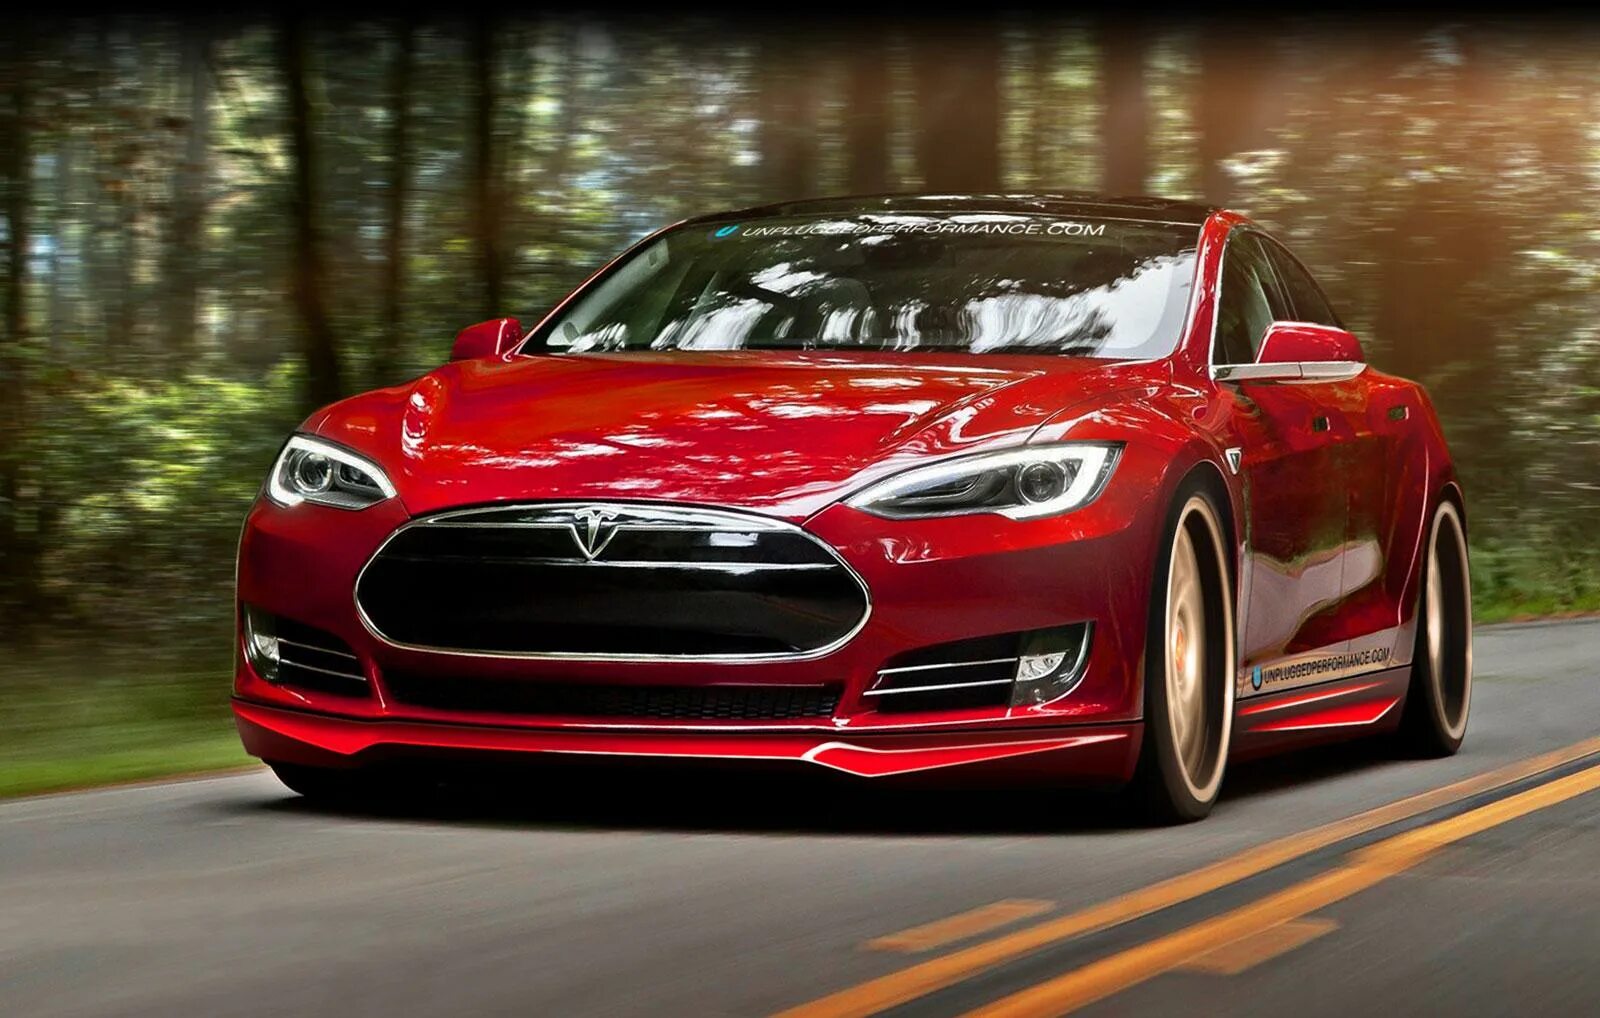 Машина Tesla model s. Электромобиль Tesla. Электромобиль Tesla model s. Электрокары Тесла. Модель s автомобиль